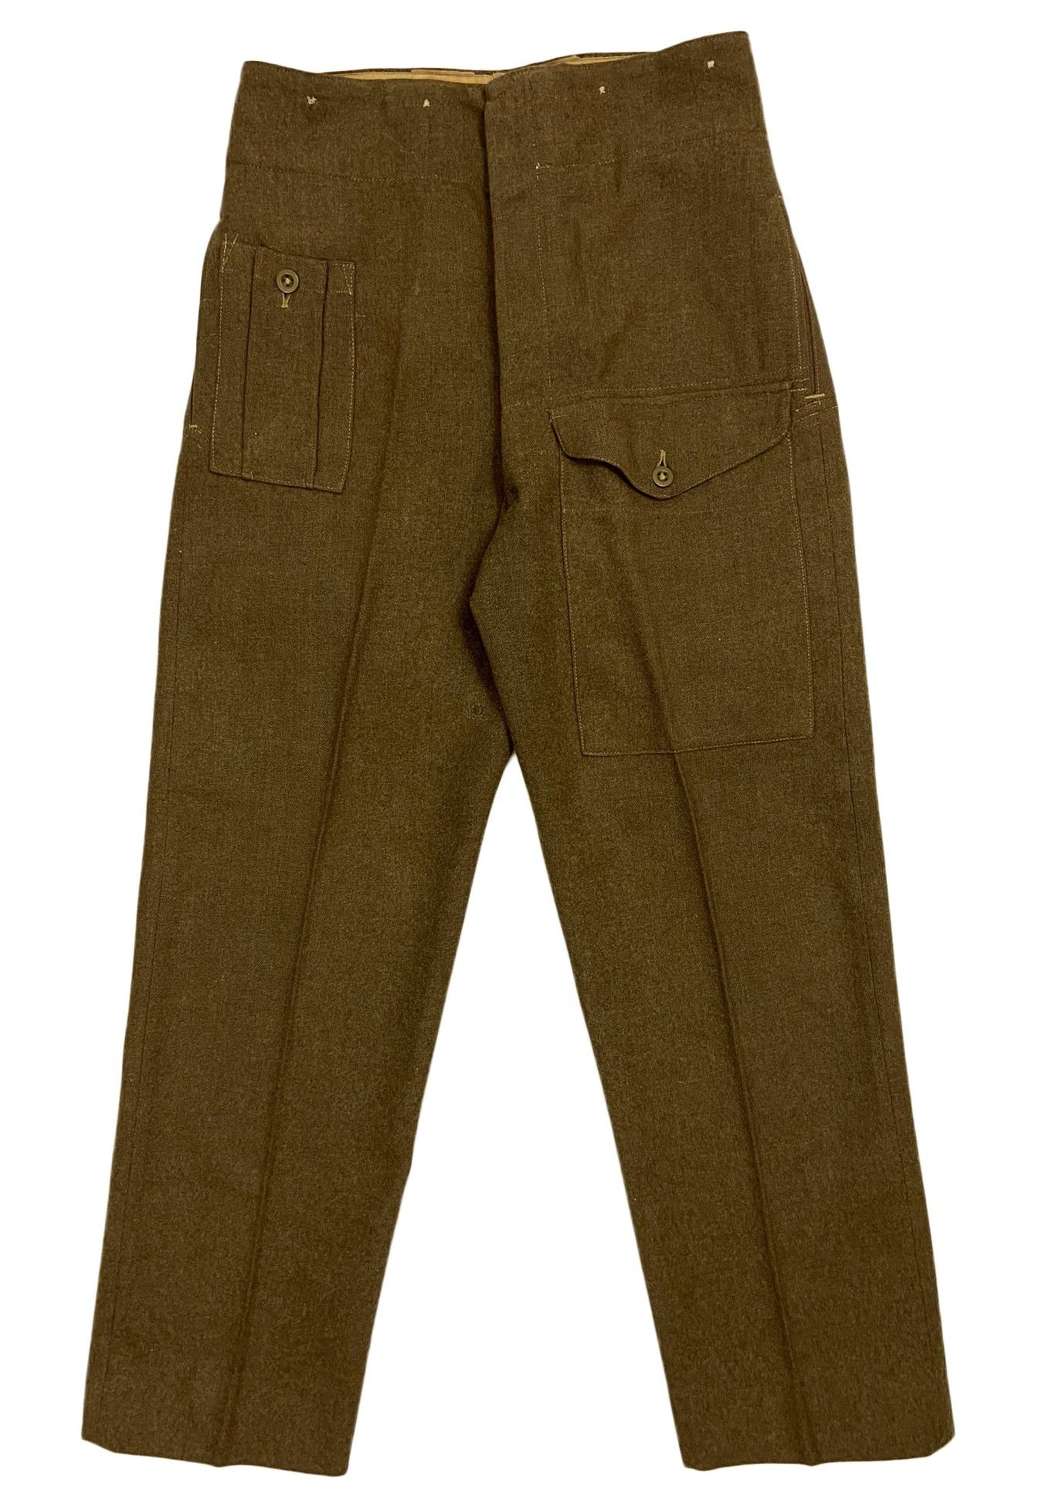 Original 1940 Pattern (Austerity) Battledress Trousers